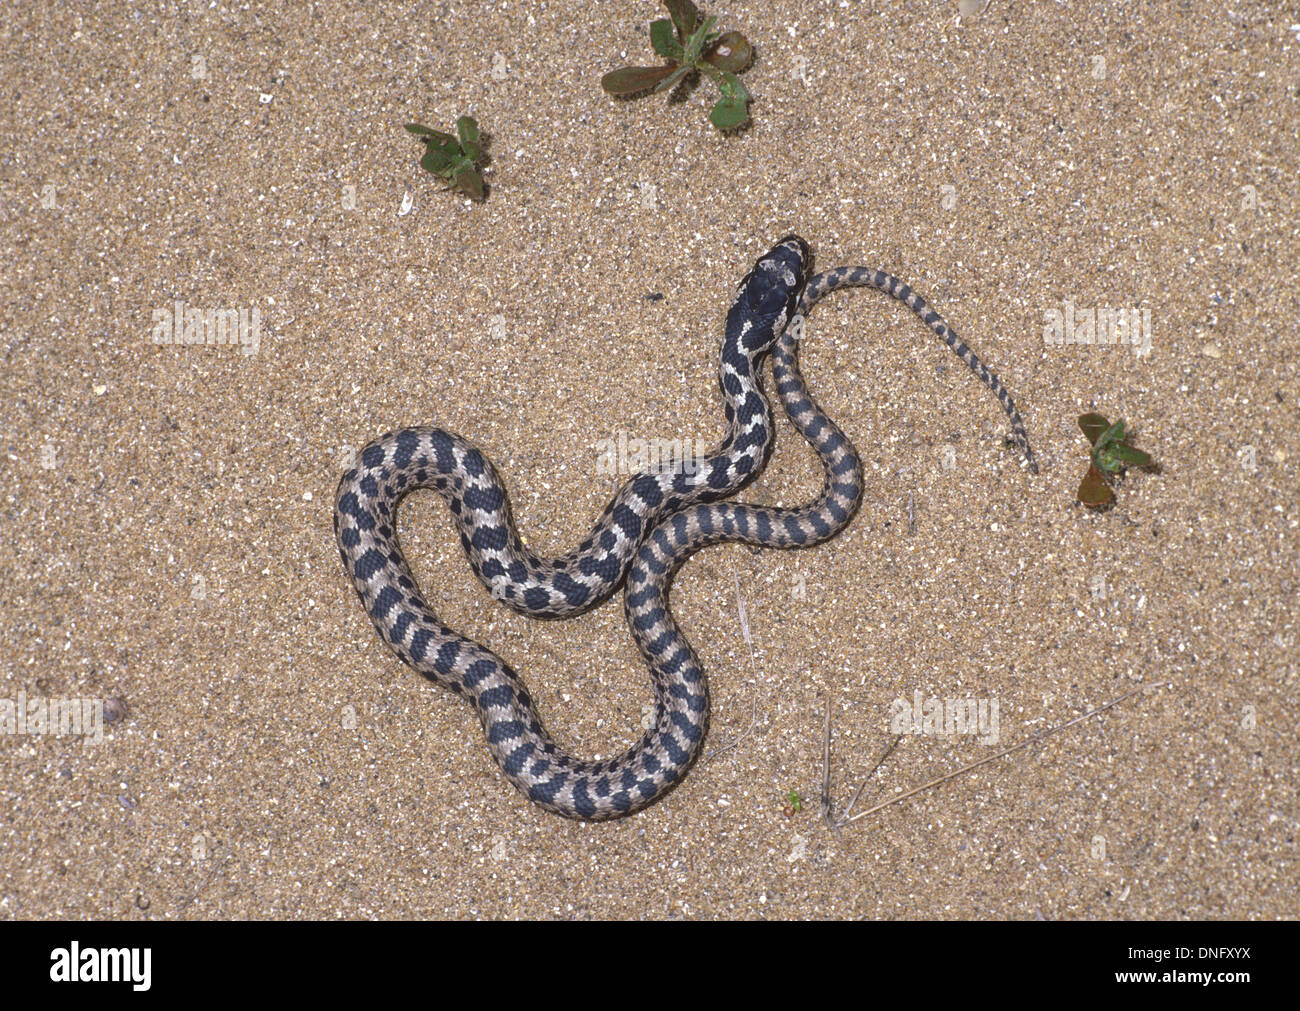 single  juvenile Four Lined Snake Elaphe quatuorlineata in sand dunes. Greece. Stock Photo